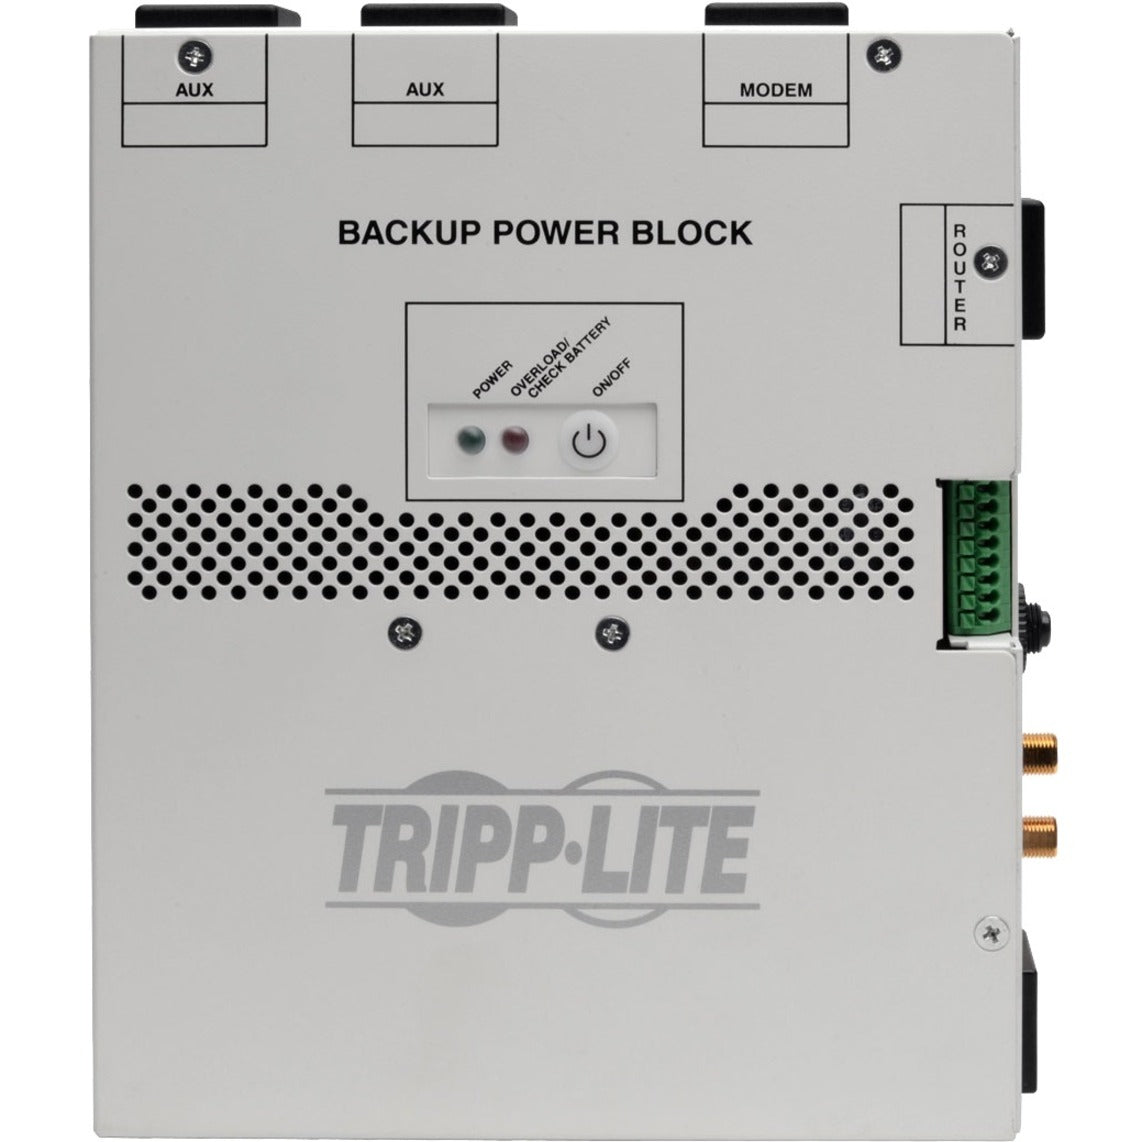 Tripp Lite AV550SC 550VA Tower UPS, Backup Power Block for Audio/Video, 2 Year Warranty